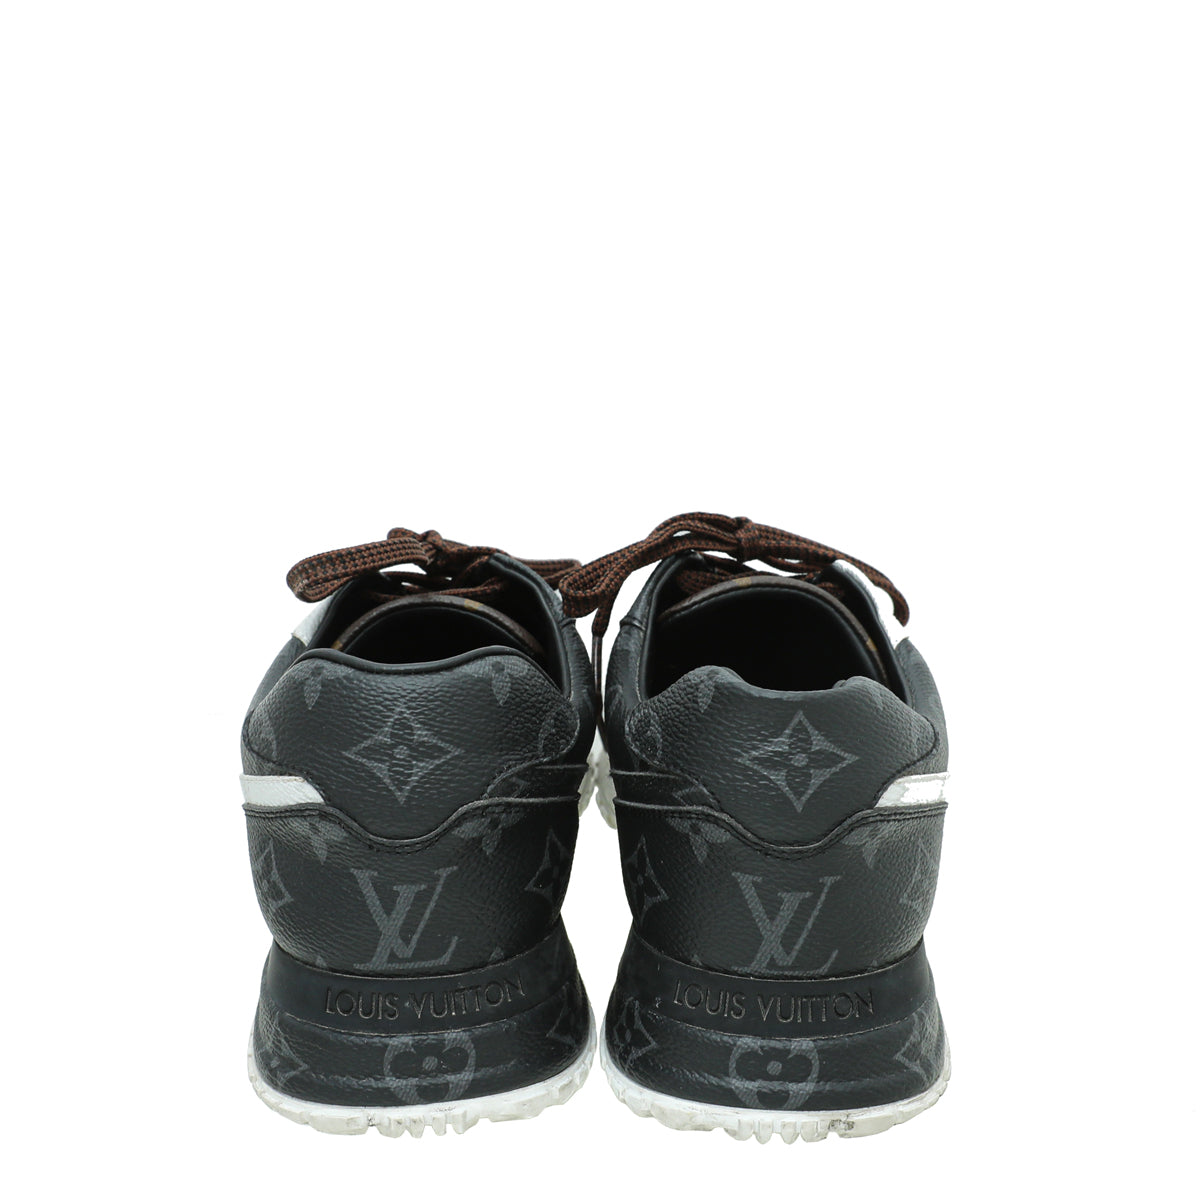 LOUIS VUITTON Monogram Time Out Sneakers 39 Black 862564